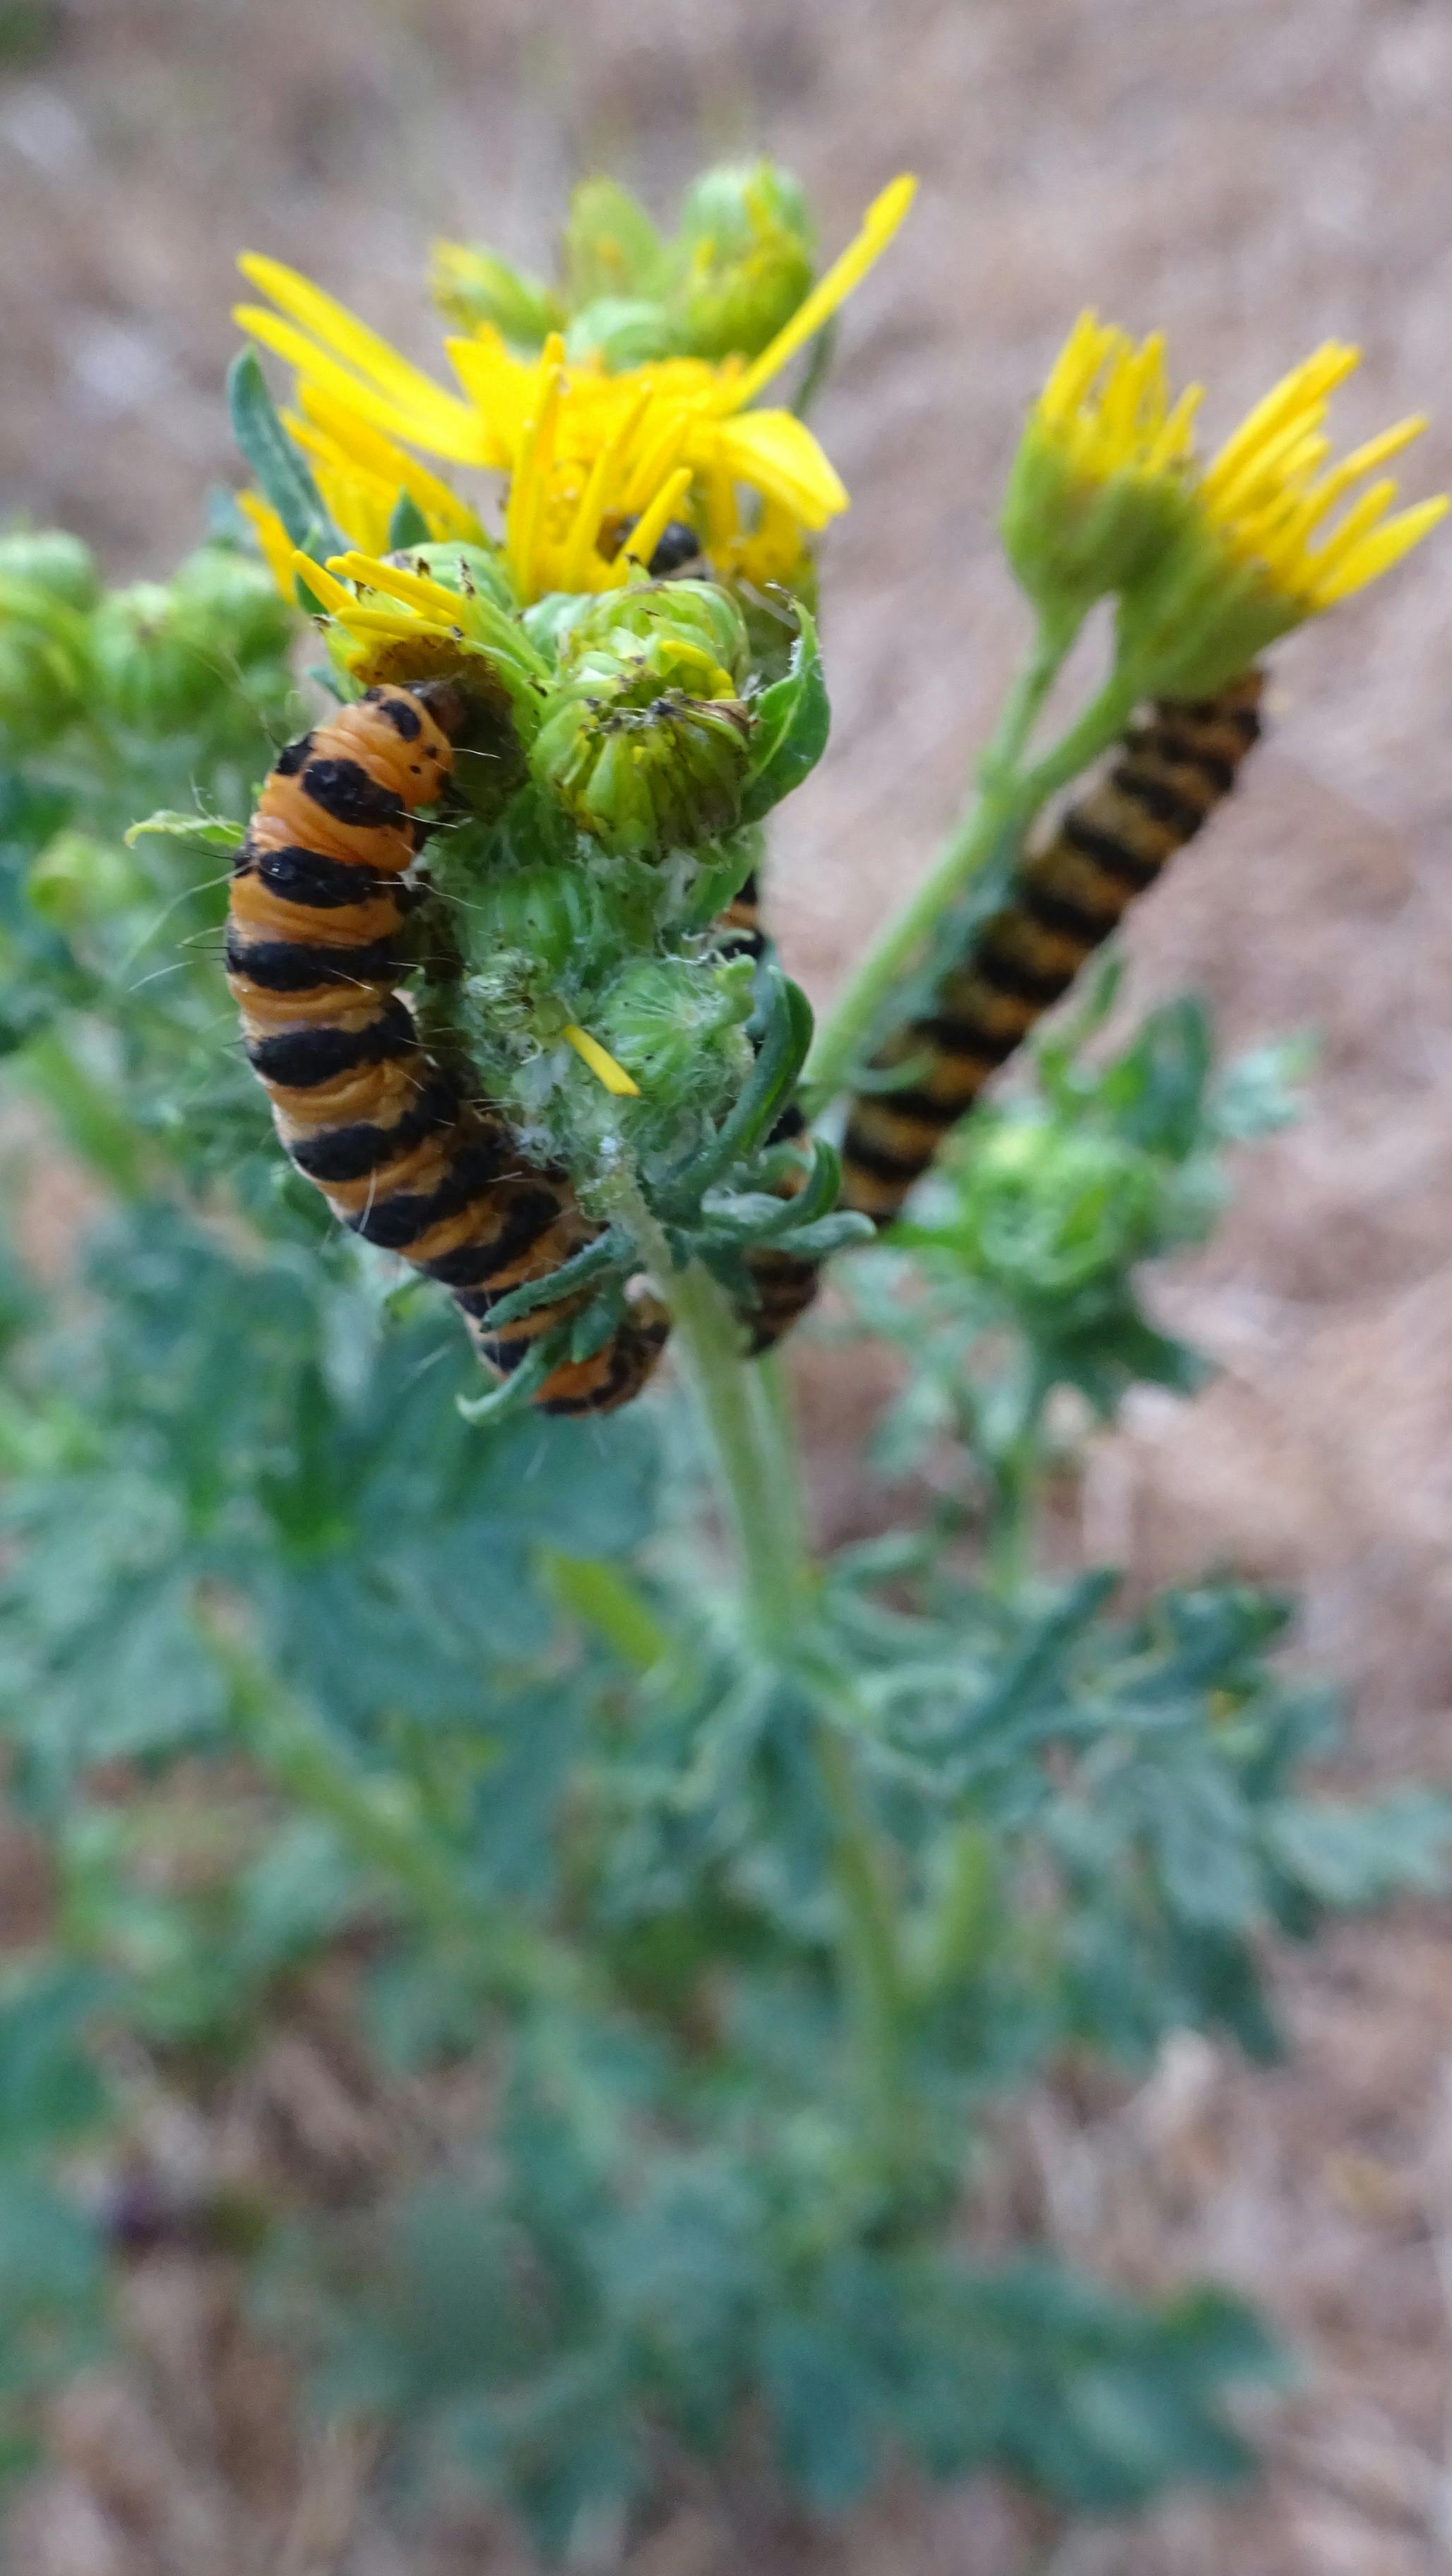 Free stock photo of caterpillar, nature photography, wildlife